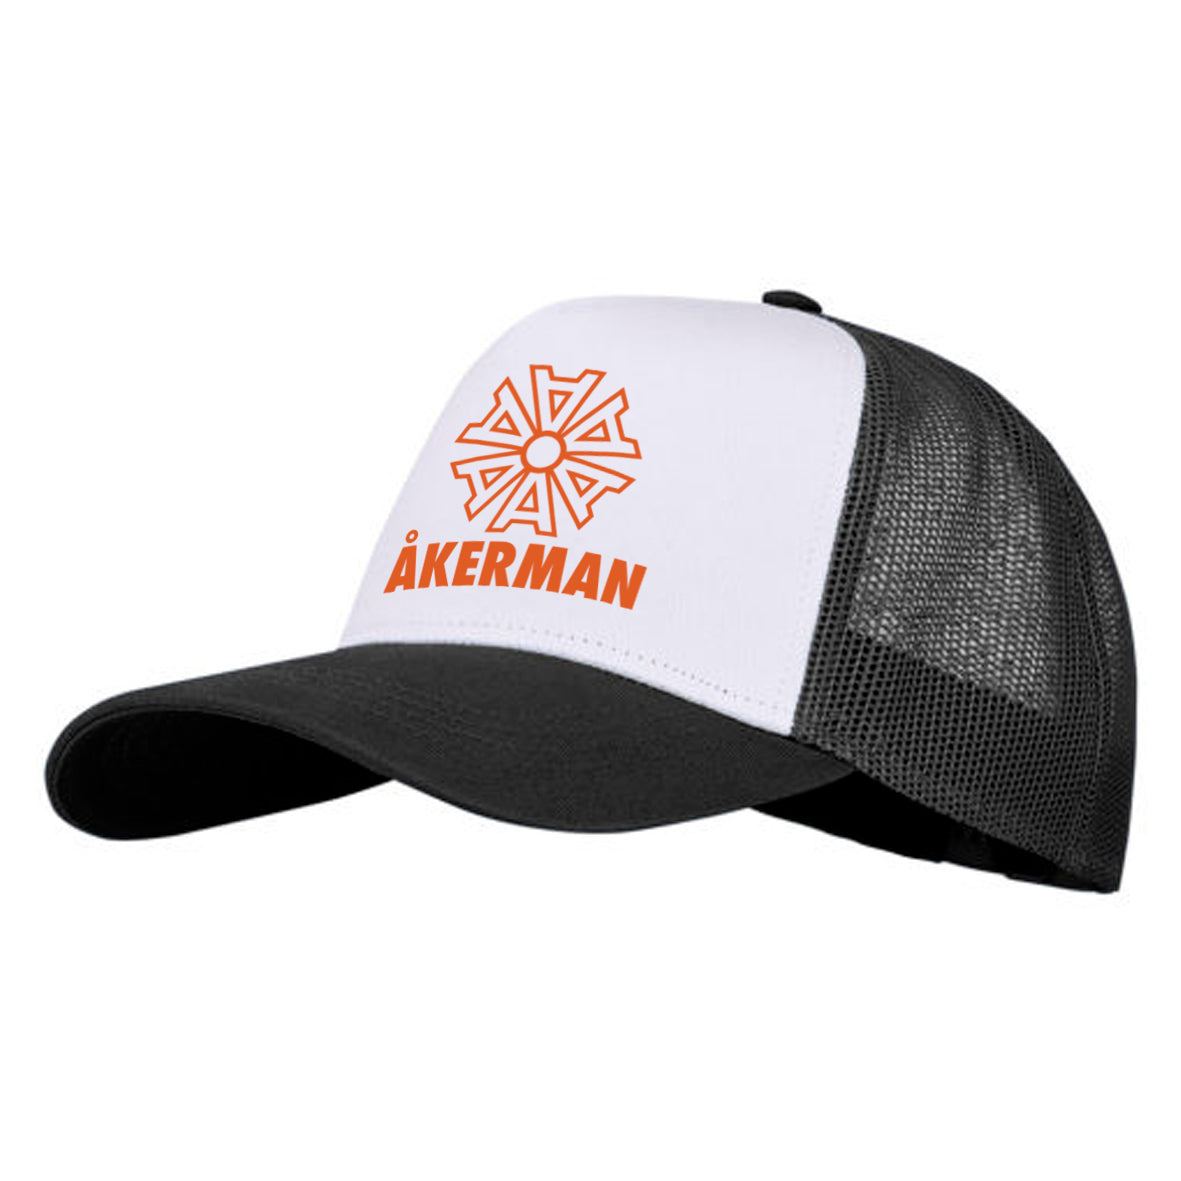 Åkerman - TruckerCaps